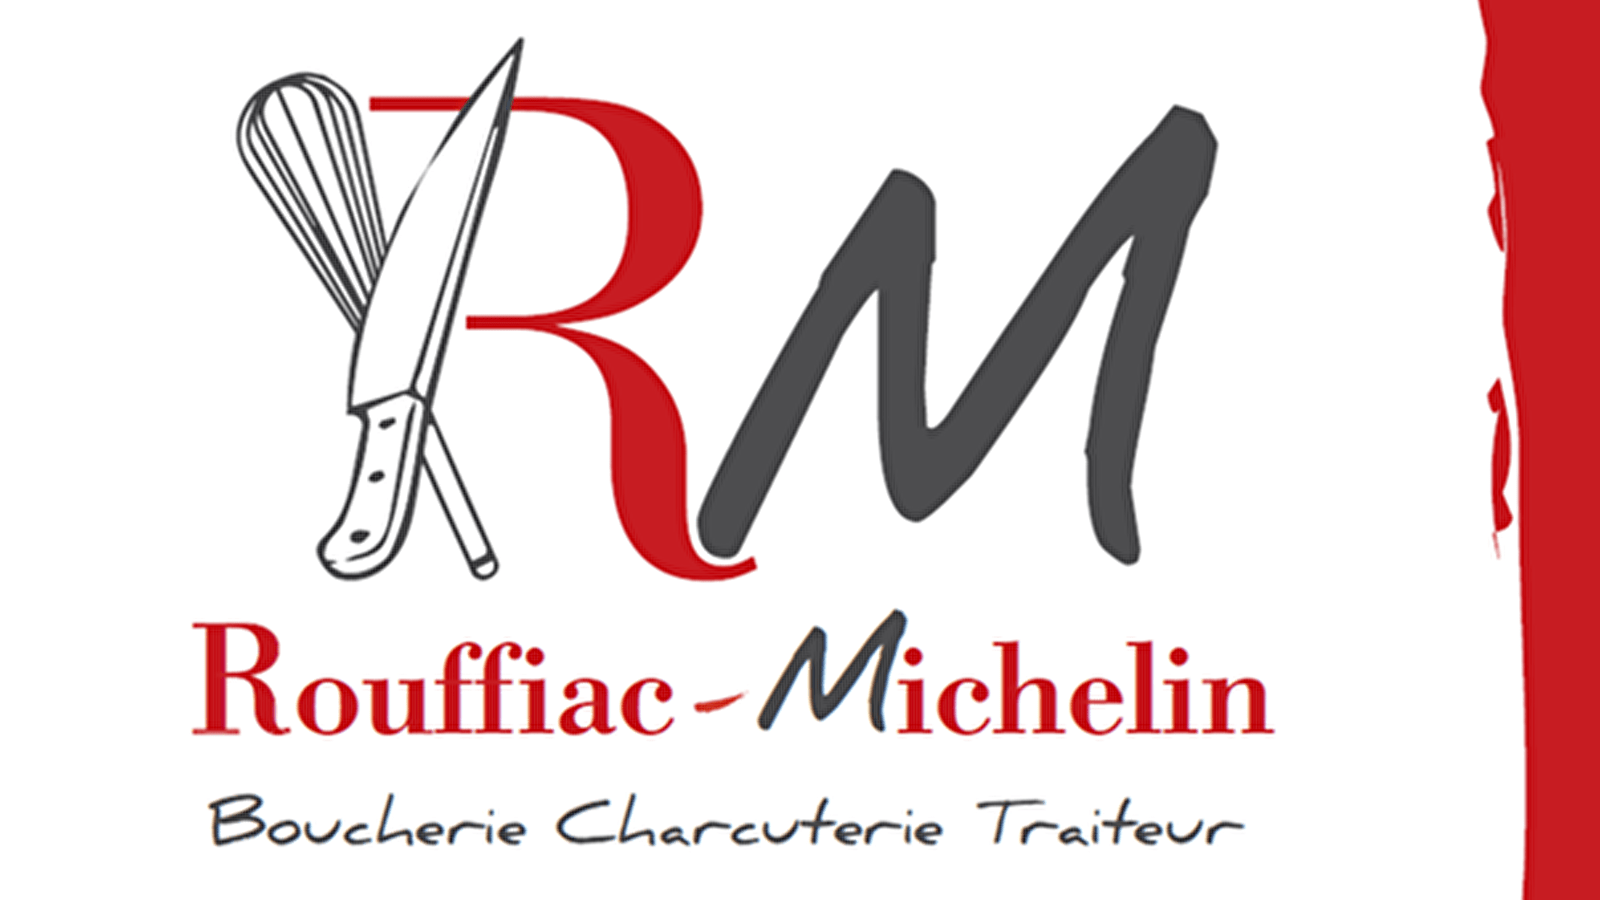 Boucherie charcuterie traiteur - rouffiac-michelin